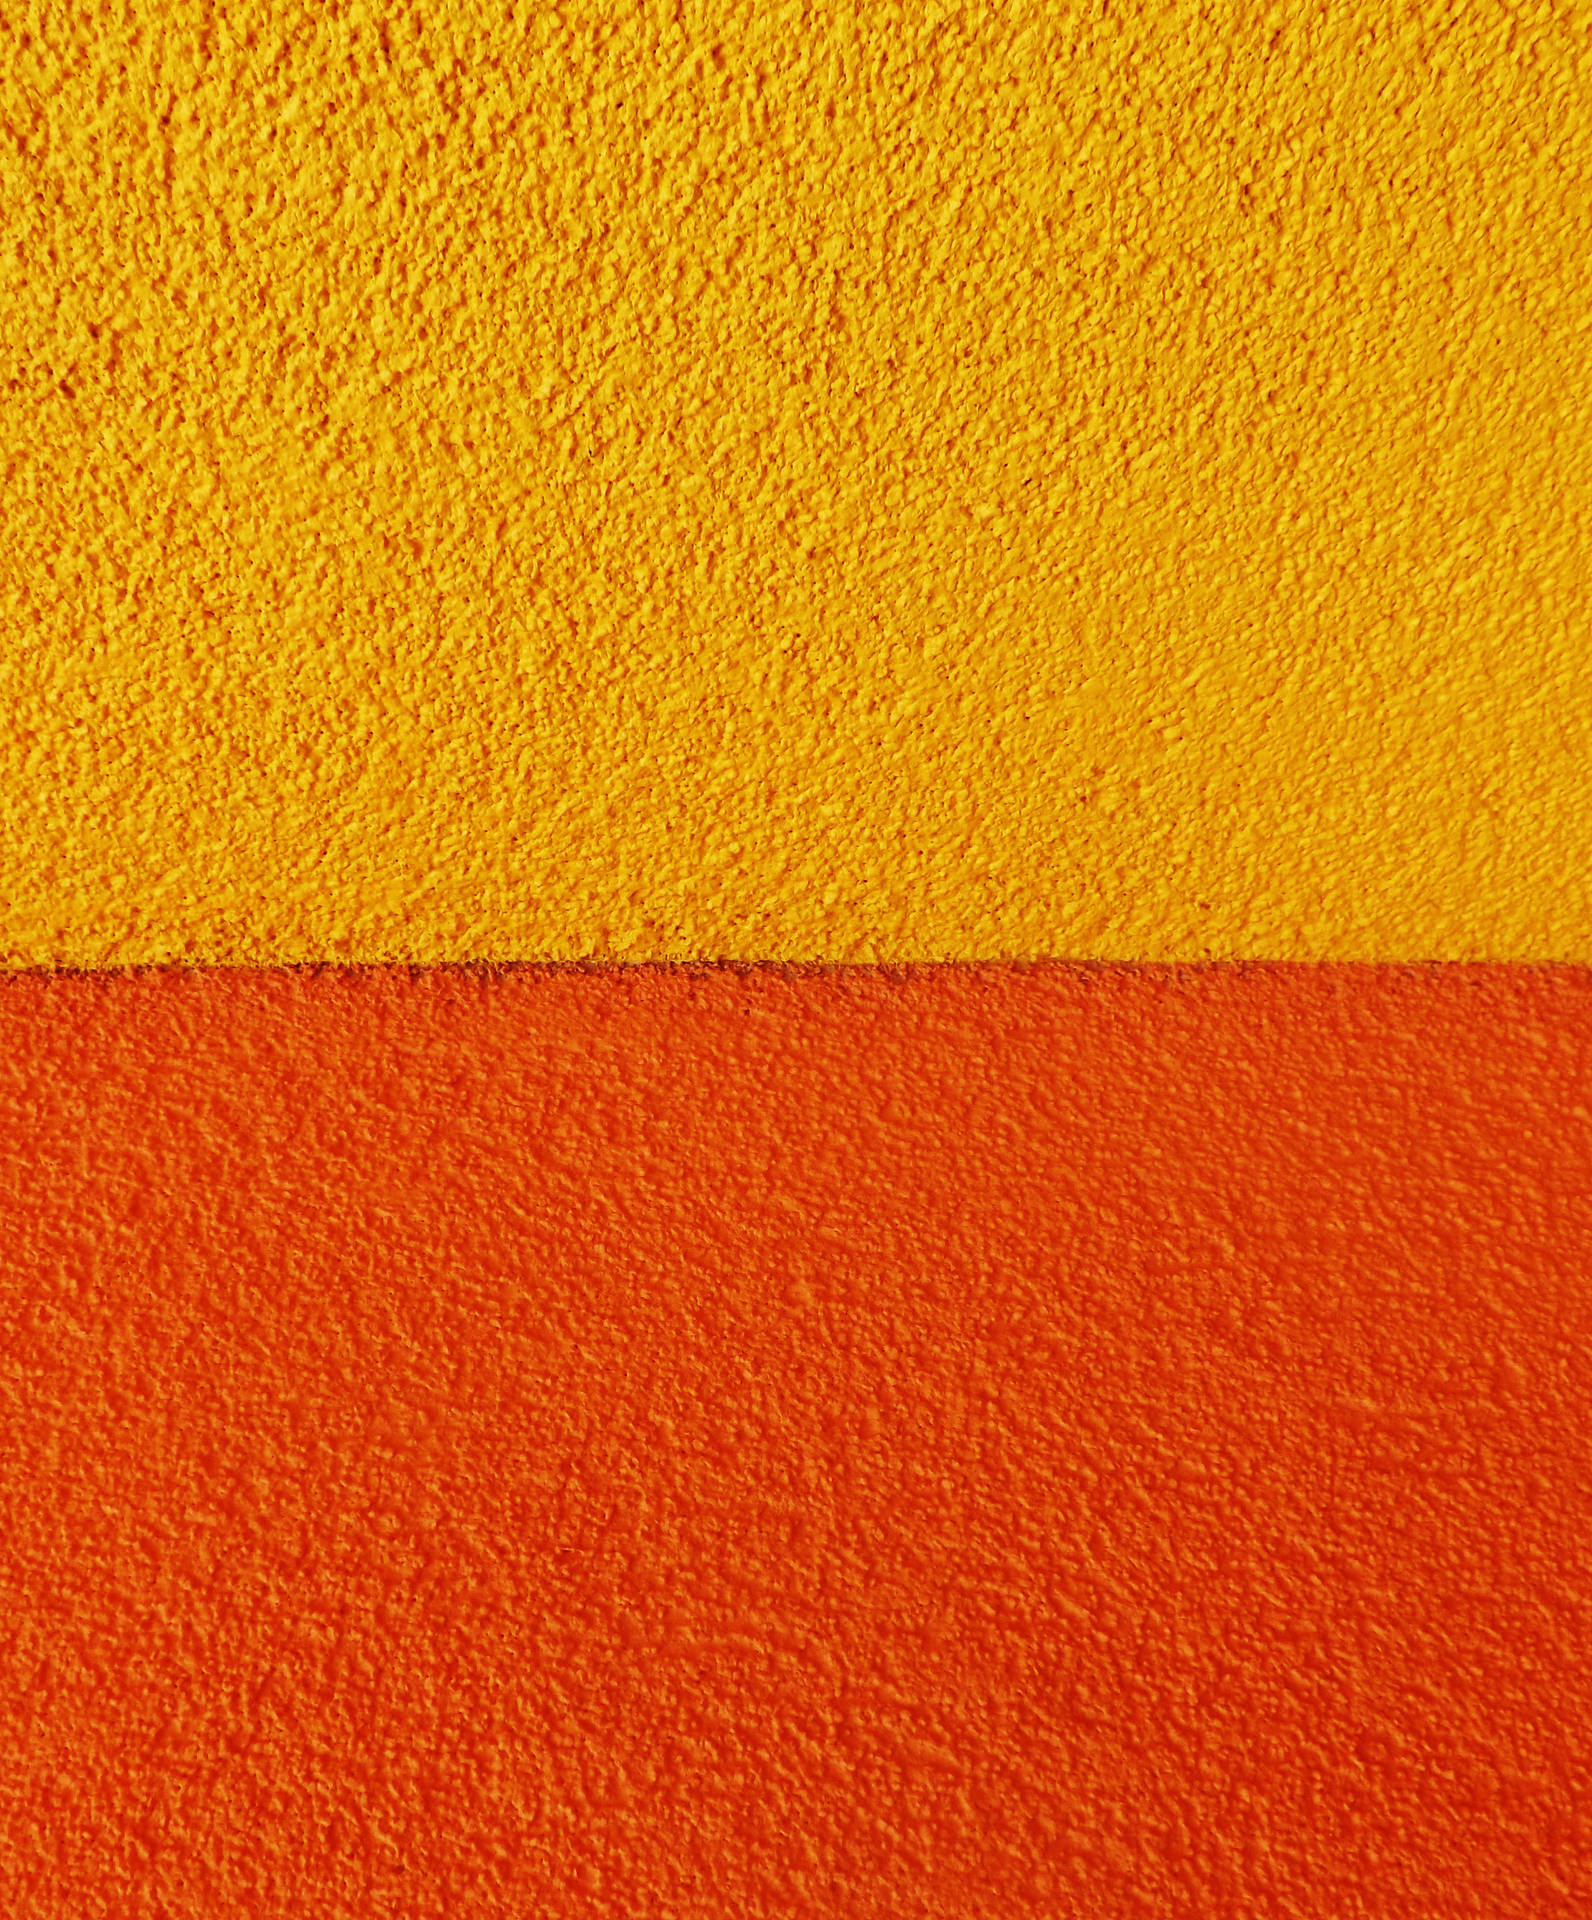 Textured Orange And Yellow Concrete Background